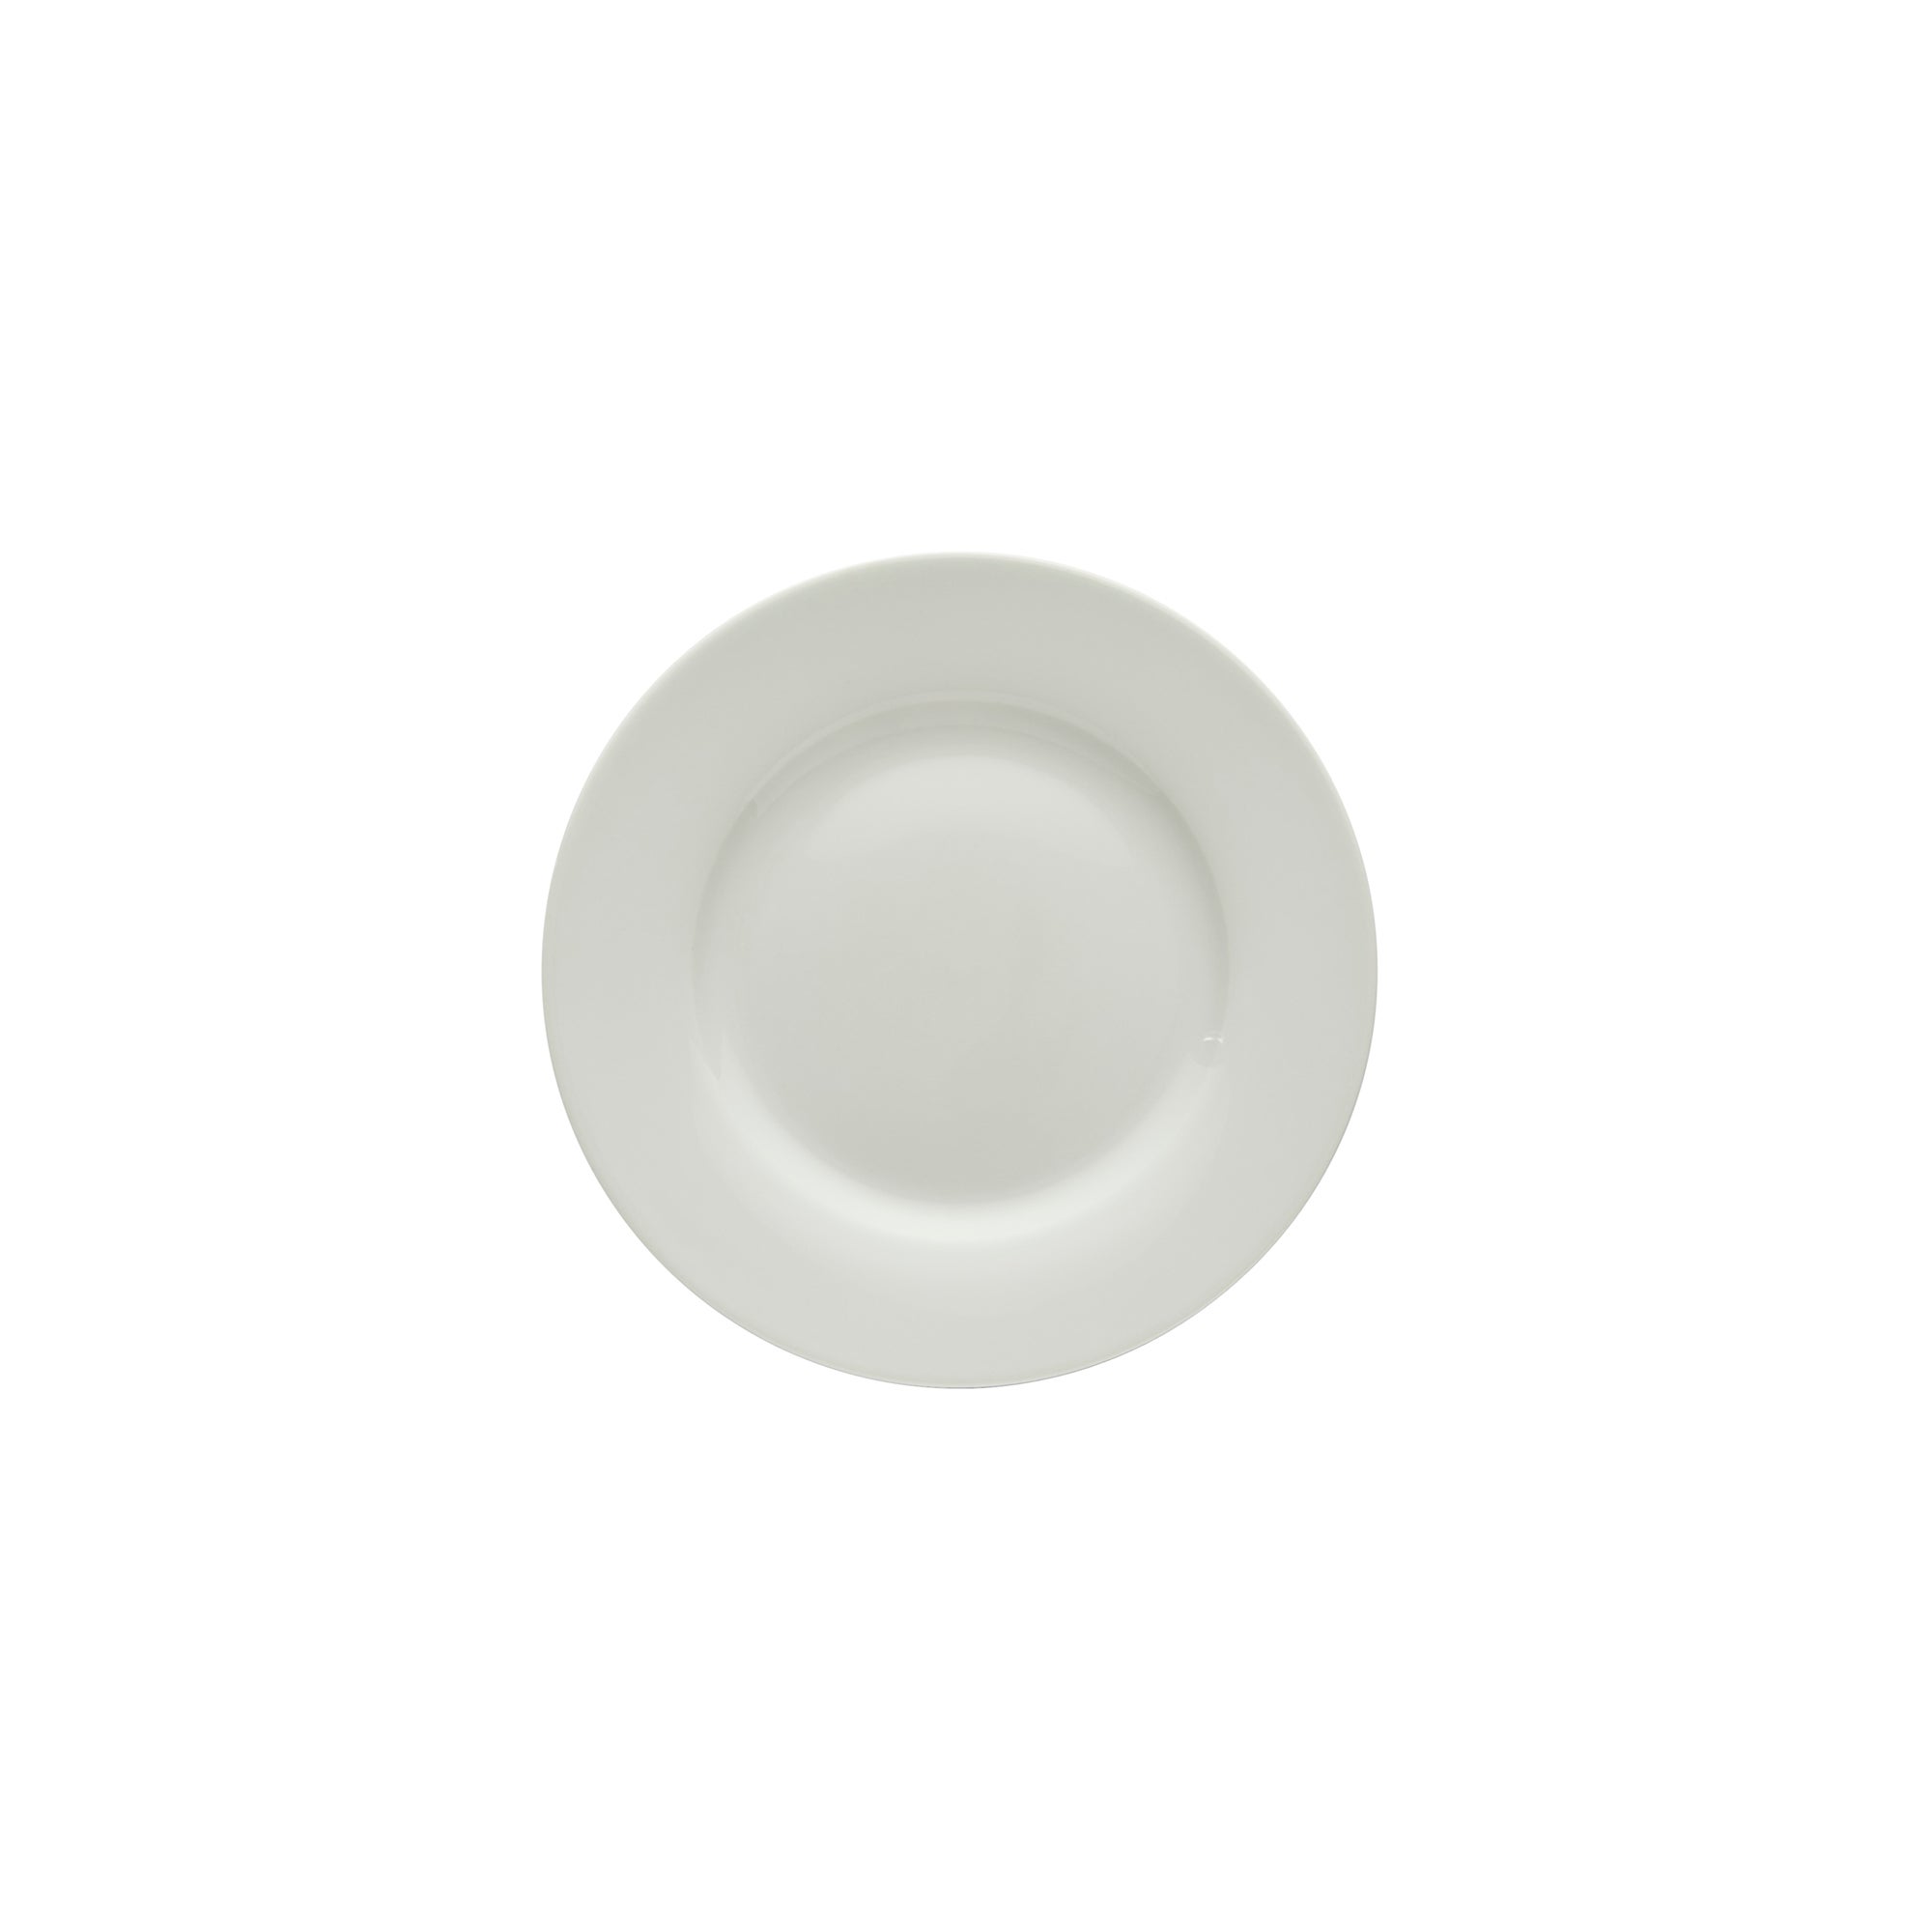 Purity Rim Porcelain Side Plate